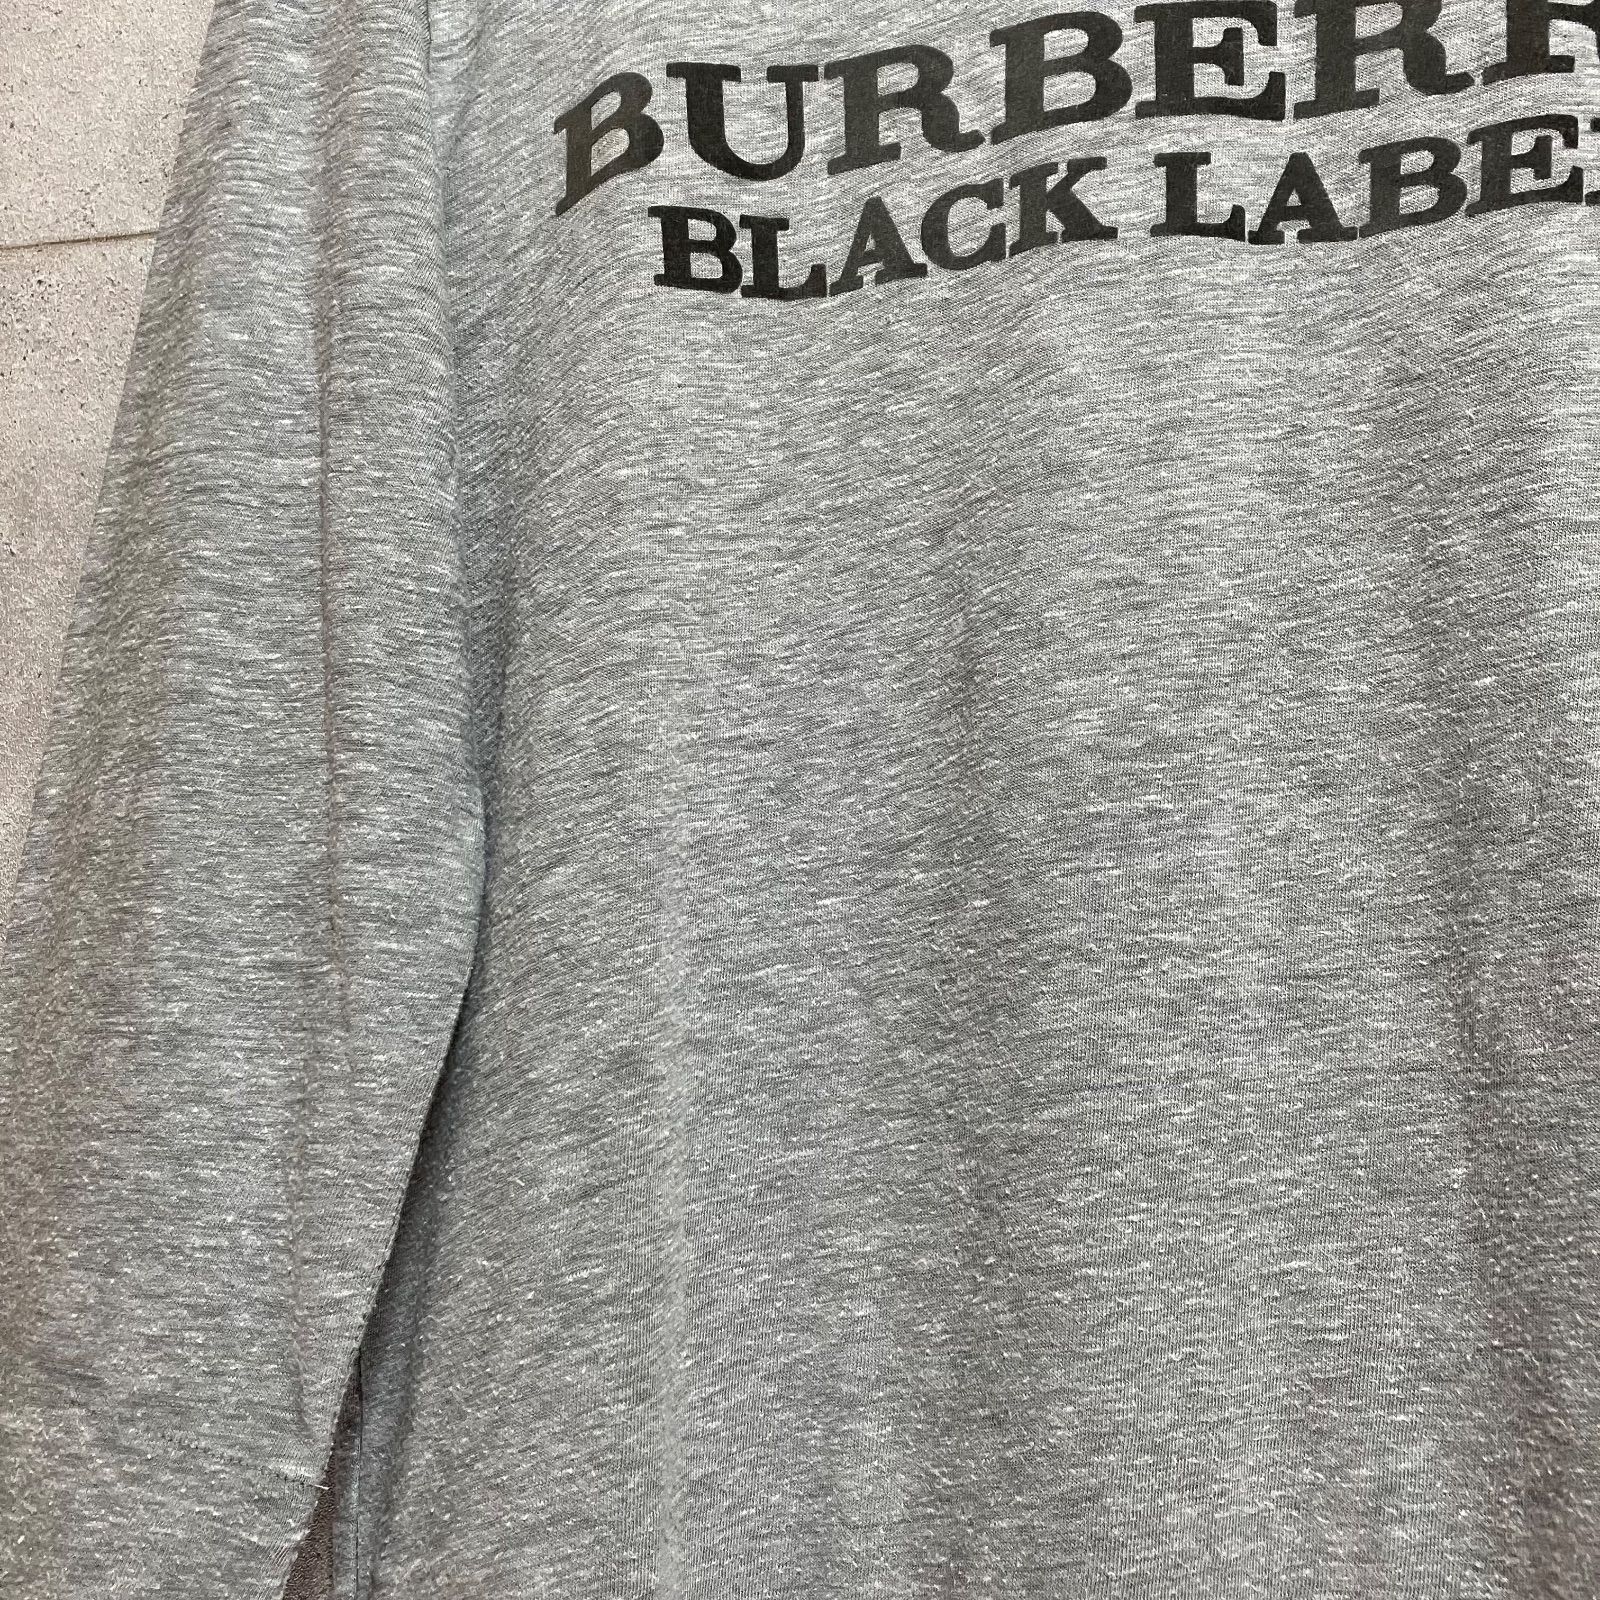 Burberry black label バーバリーブラックレーベル ロンT グレー 3 